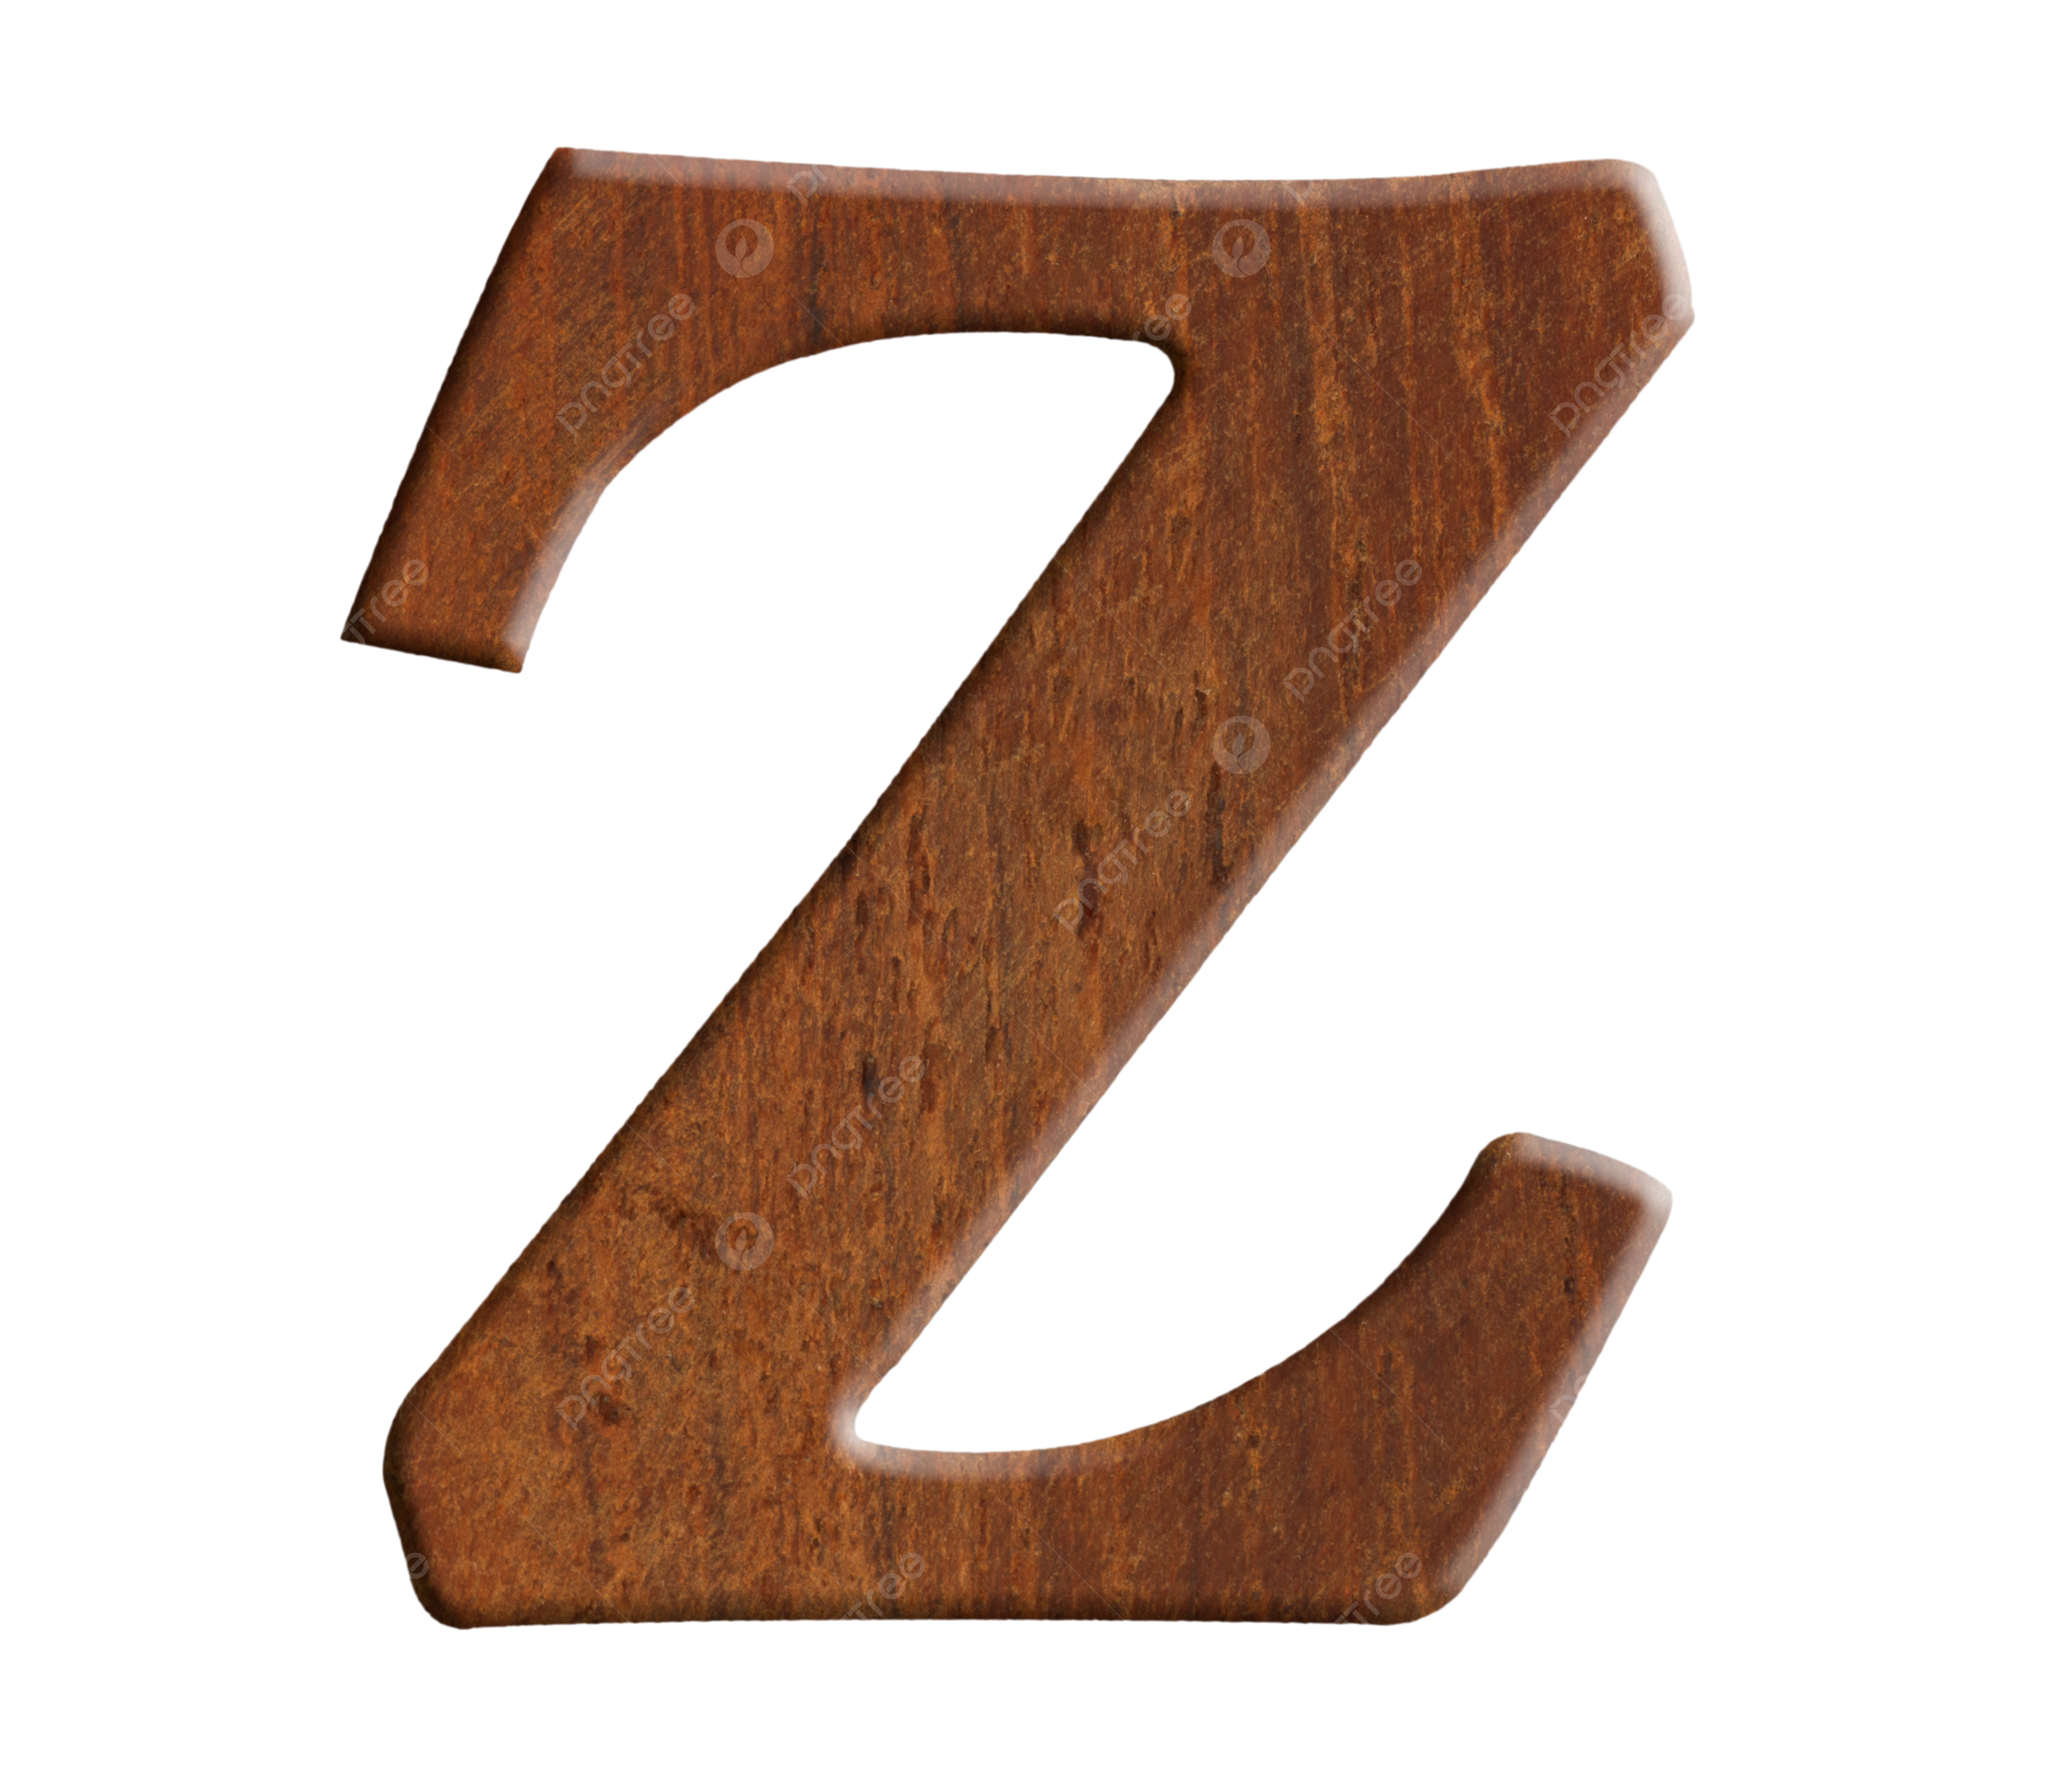 Letras del alfabeto de madera disputas en un png dibujos marketing vista seãal png imagen para dcarga gratuita